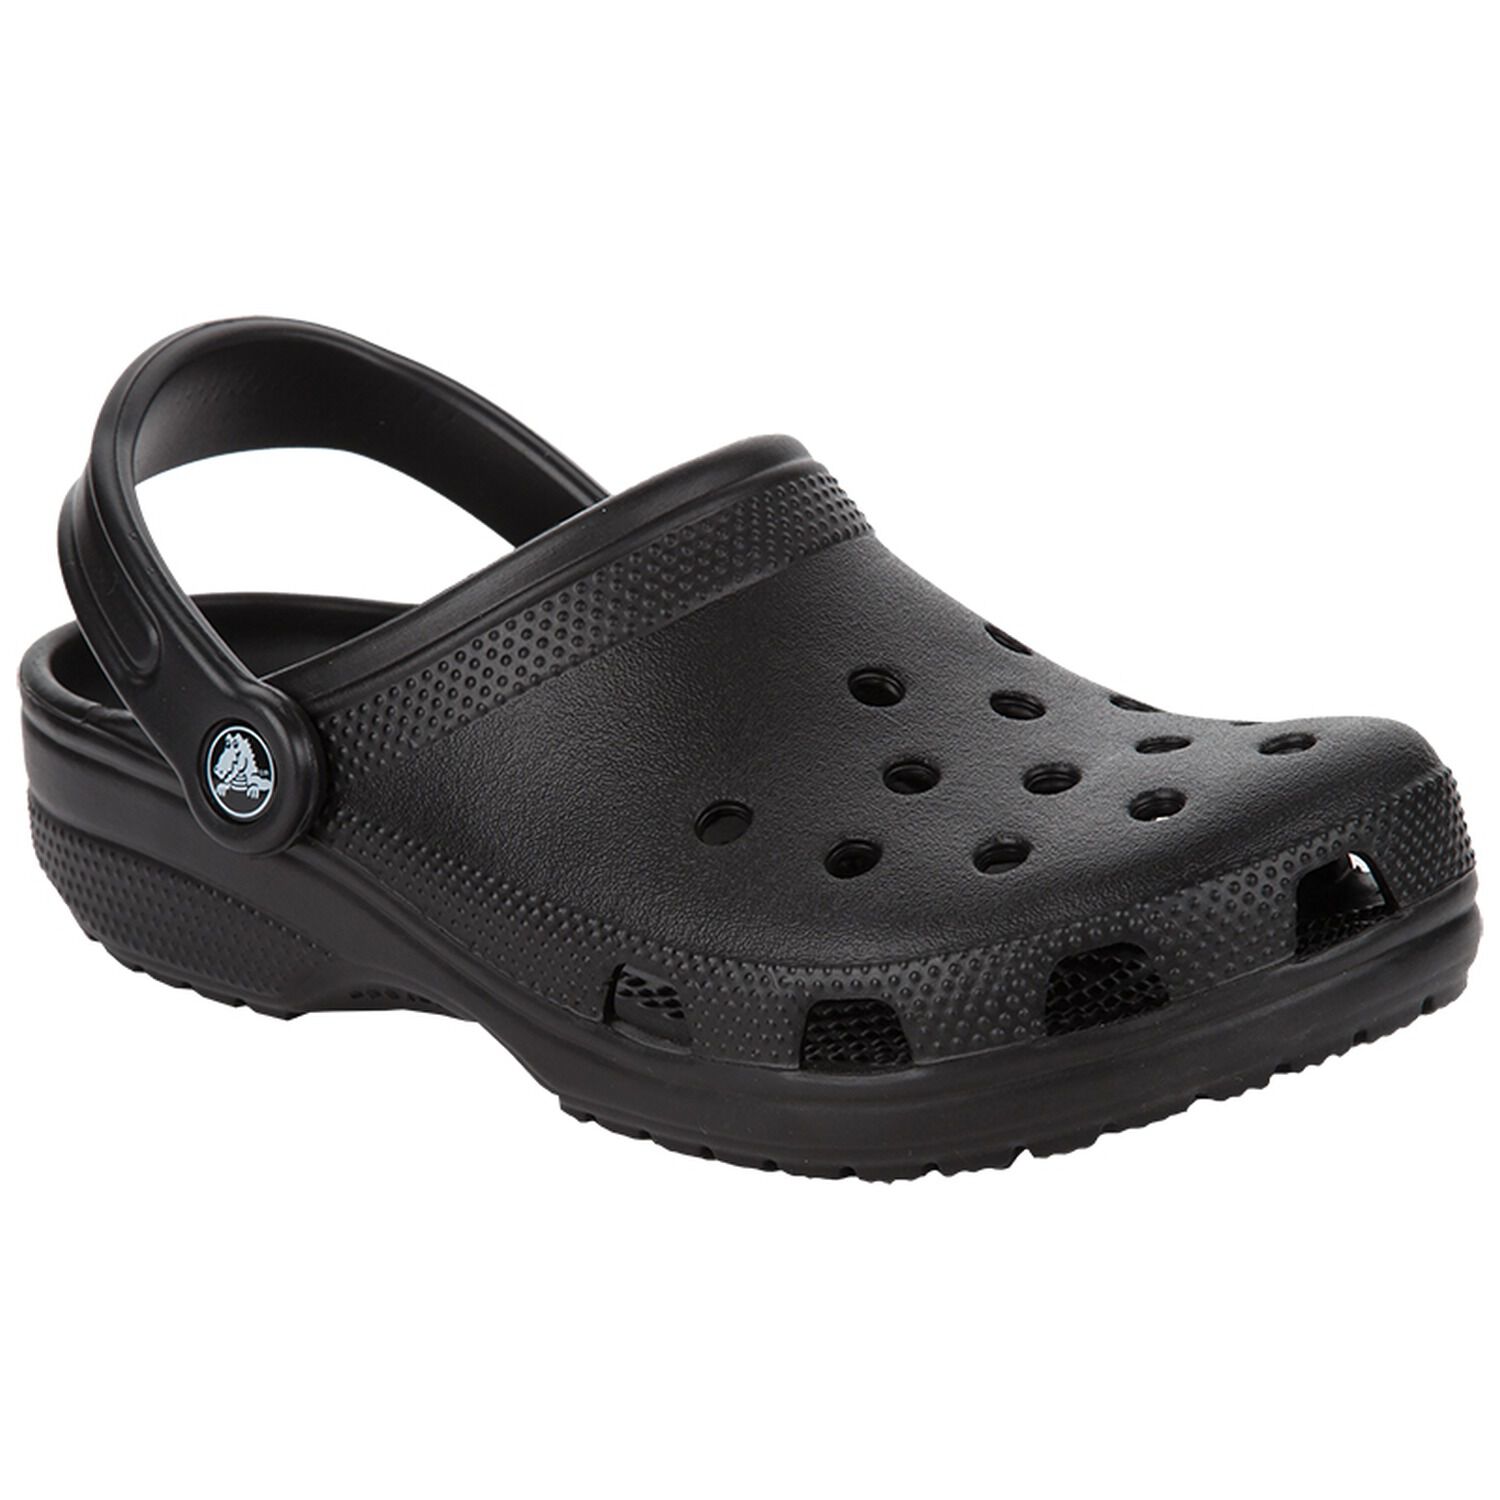 Crocs Men's Classic Sandal